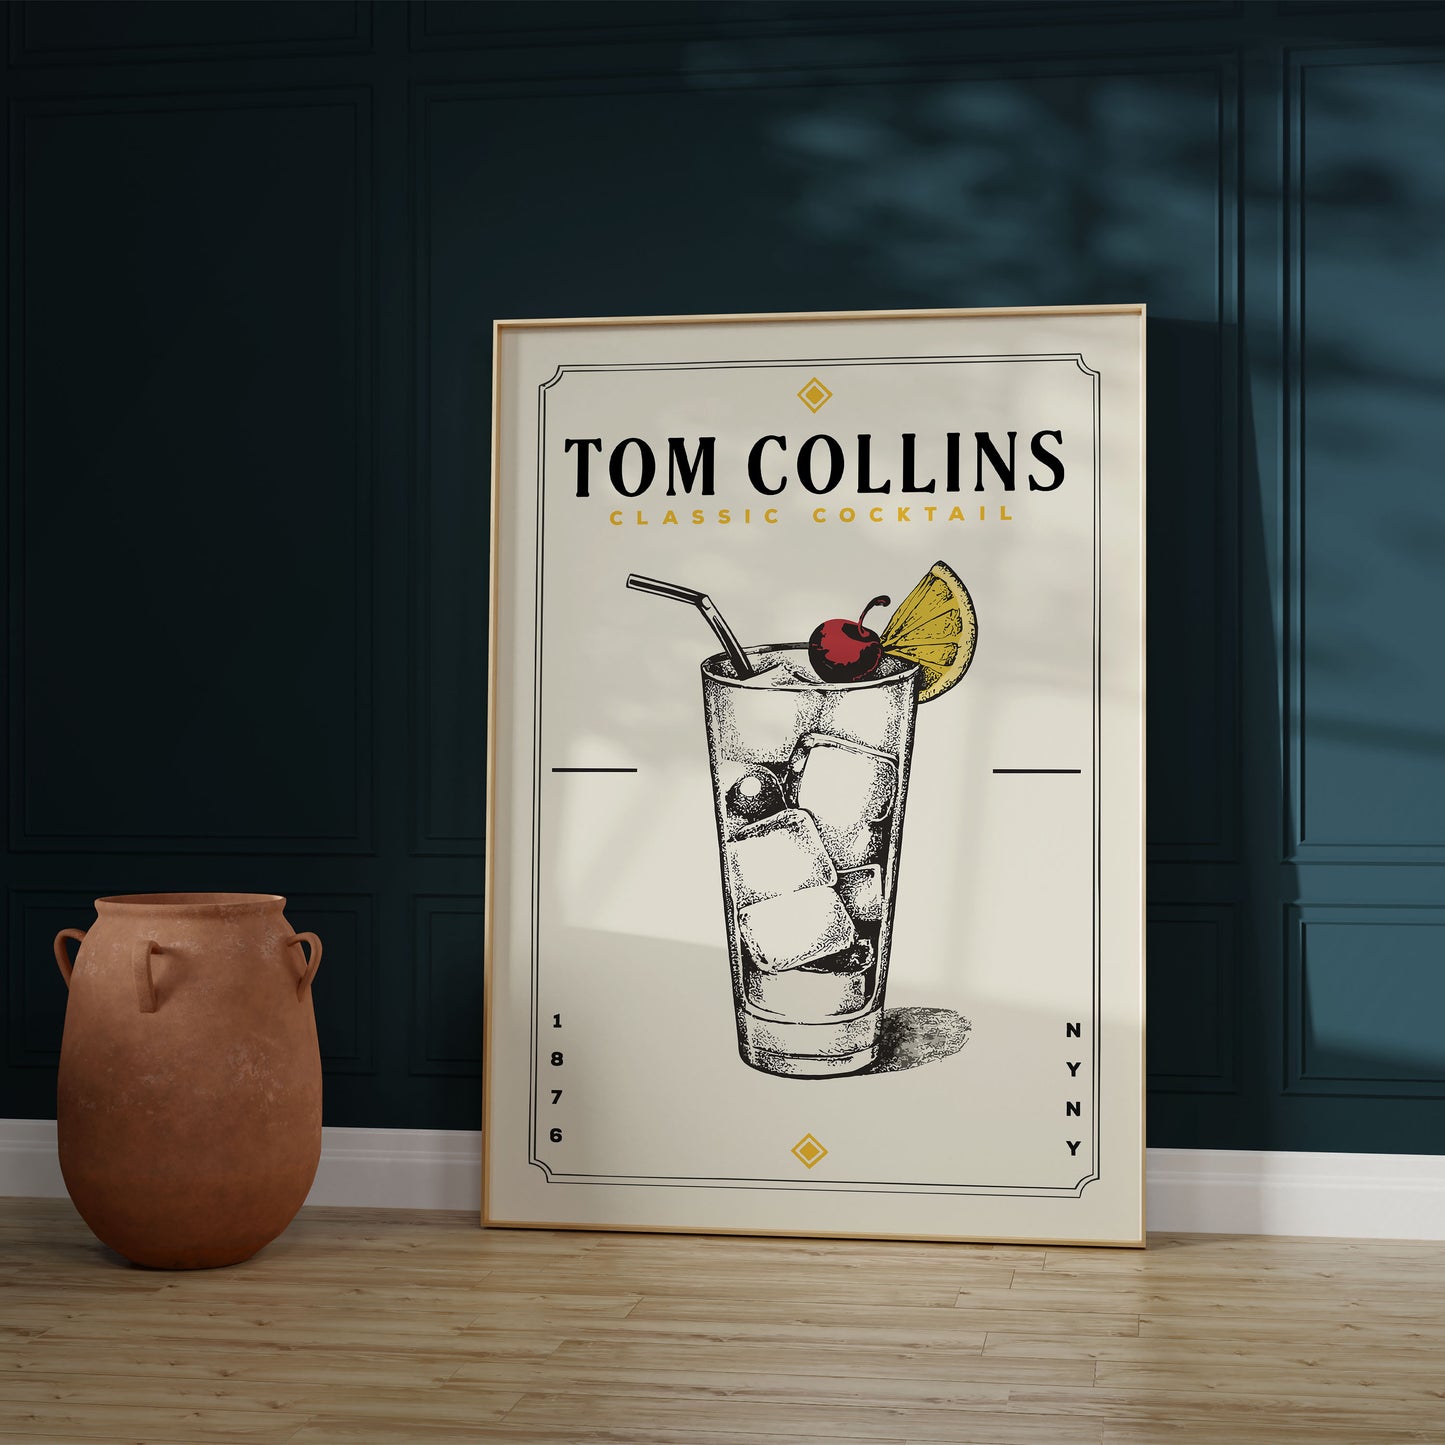 Tom Collins - Minimalist Cocktail Poster